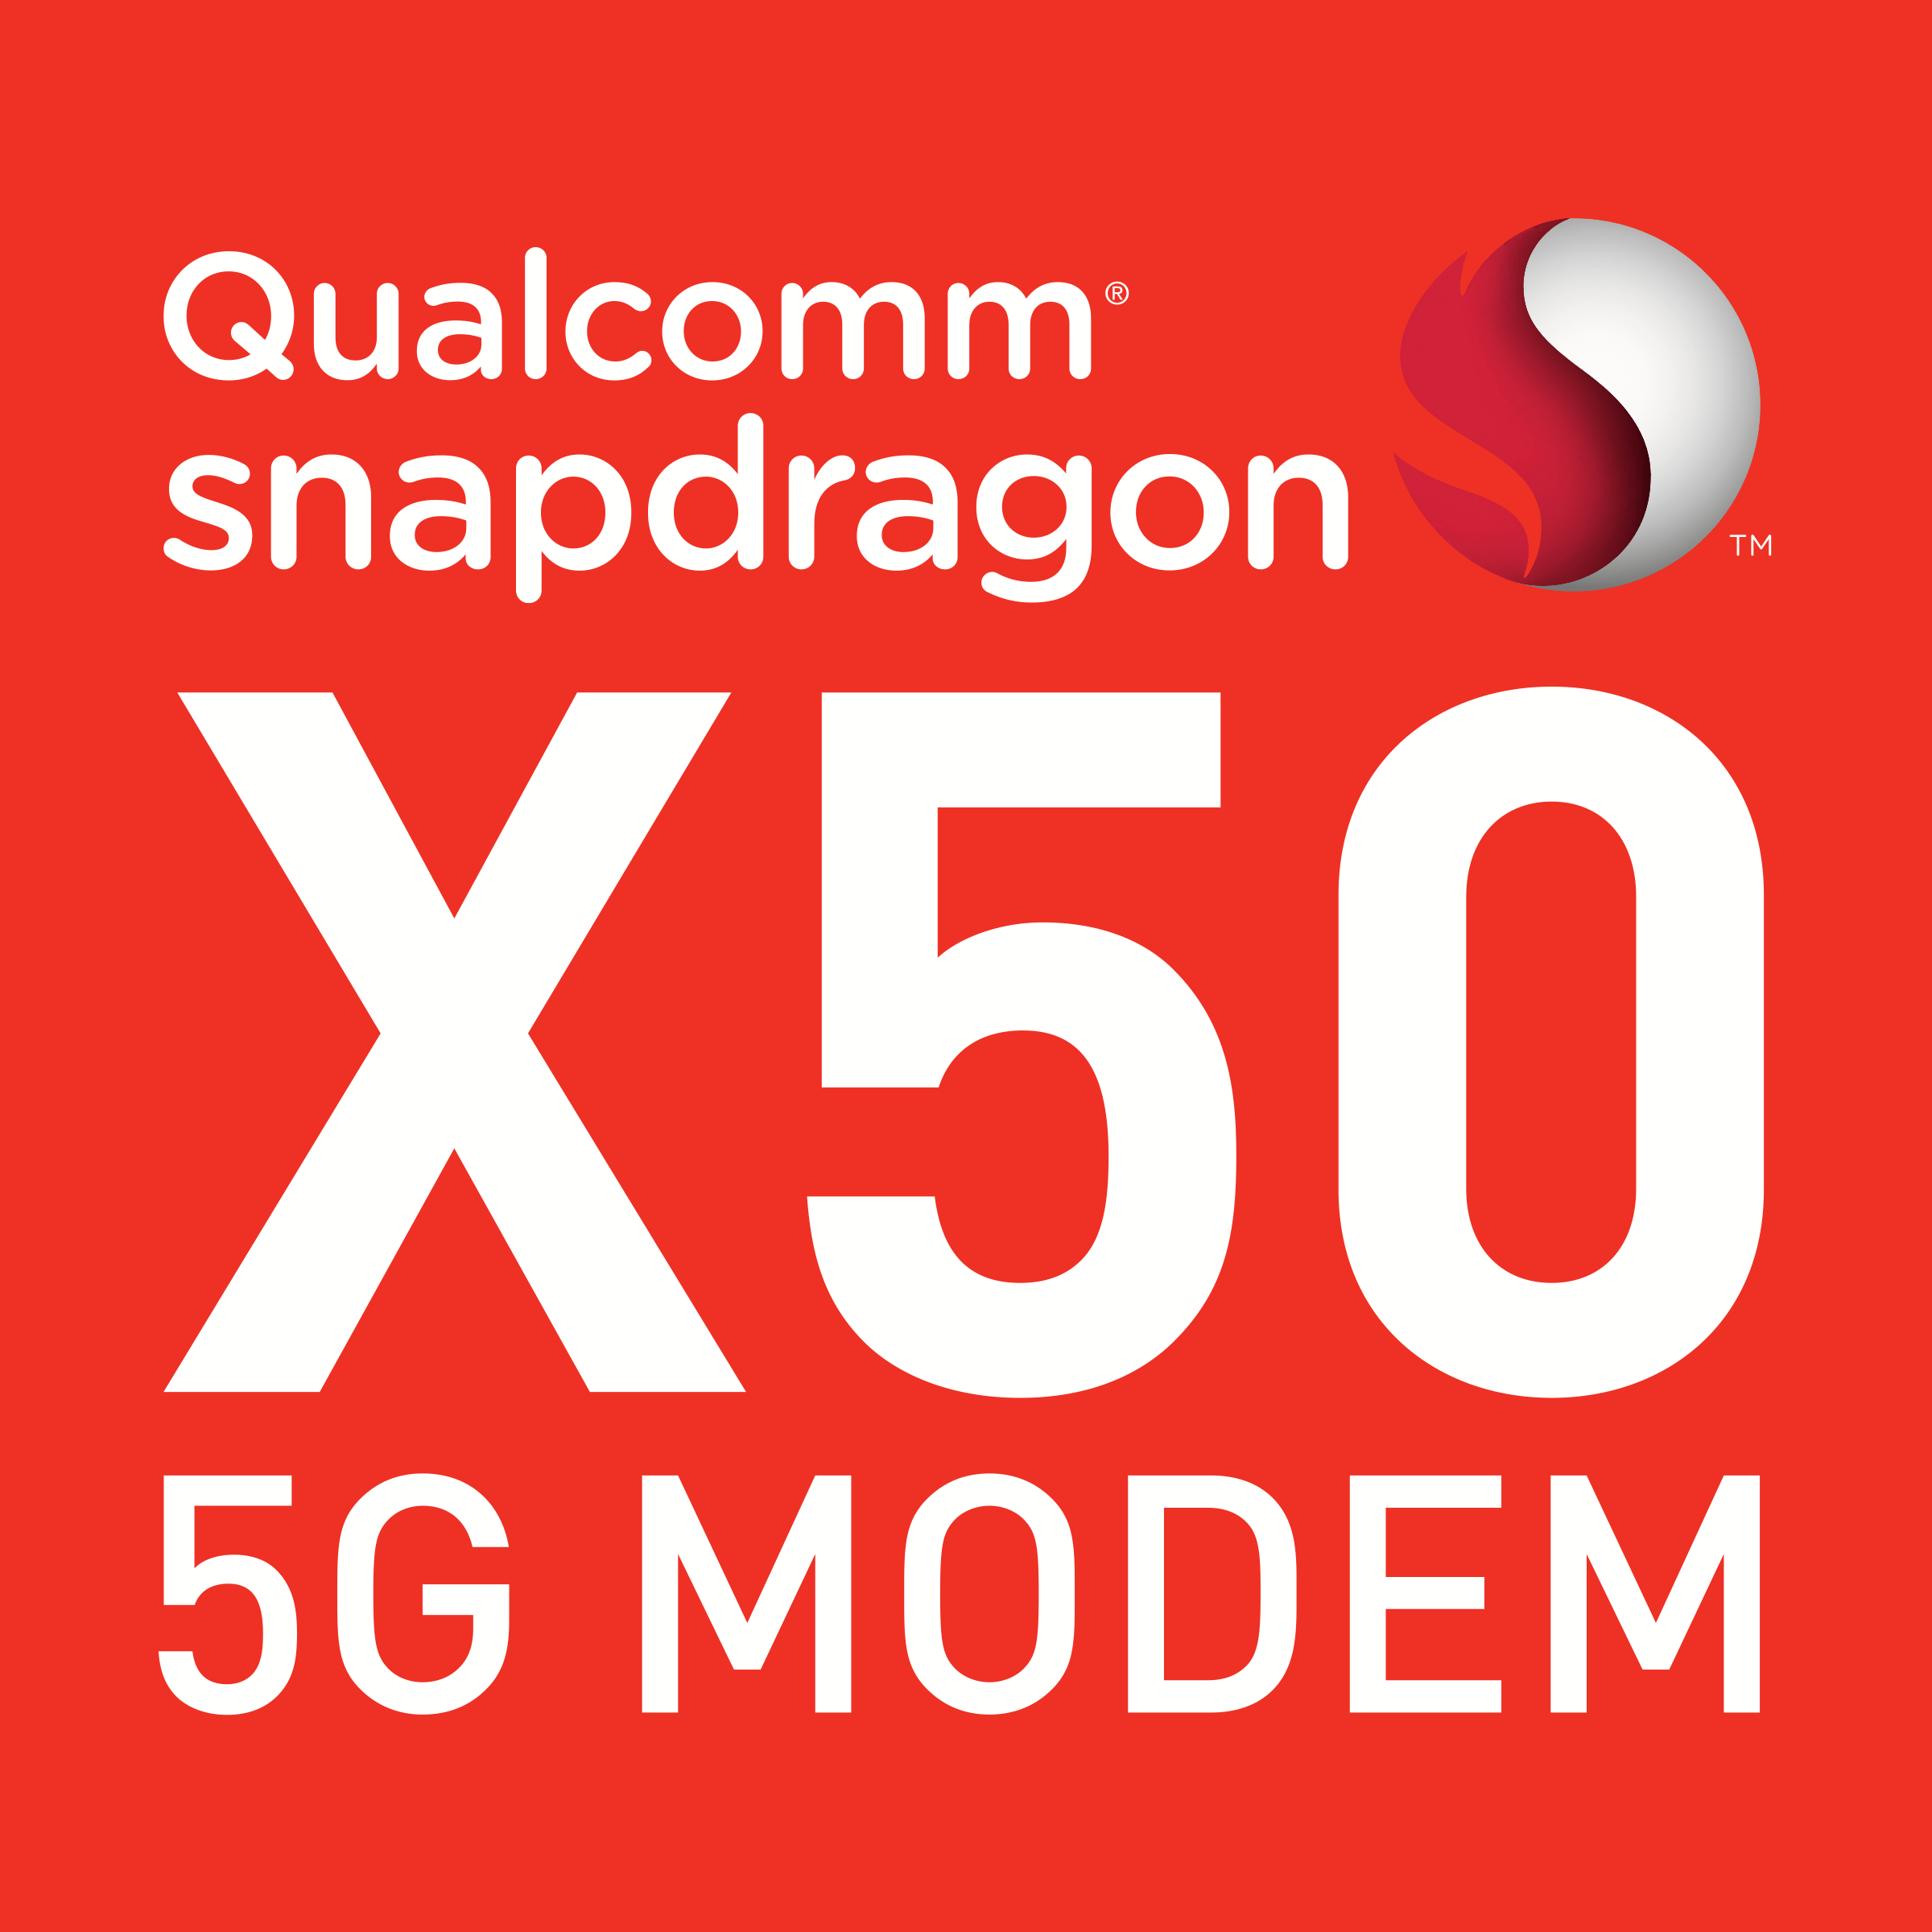 Qualcomm Snapdragon Logo - Qualcomm Snapdragon X50 5G Modem Logo | Qualcomm